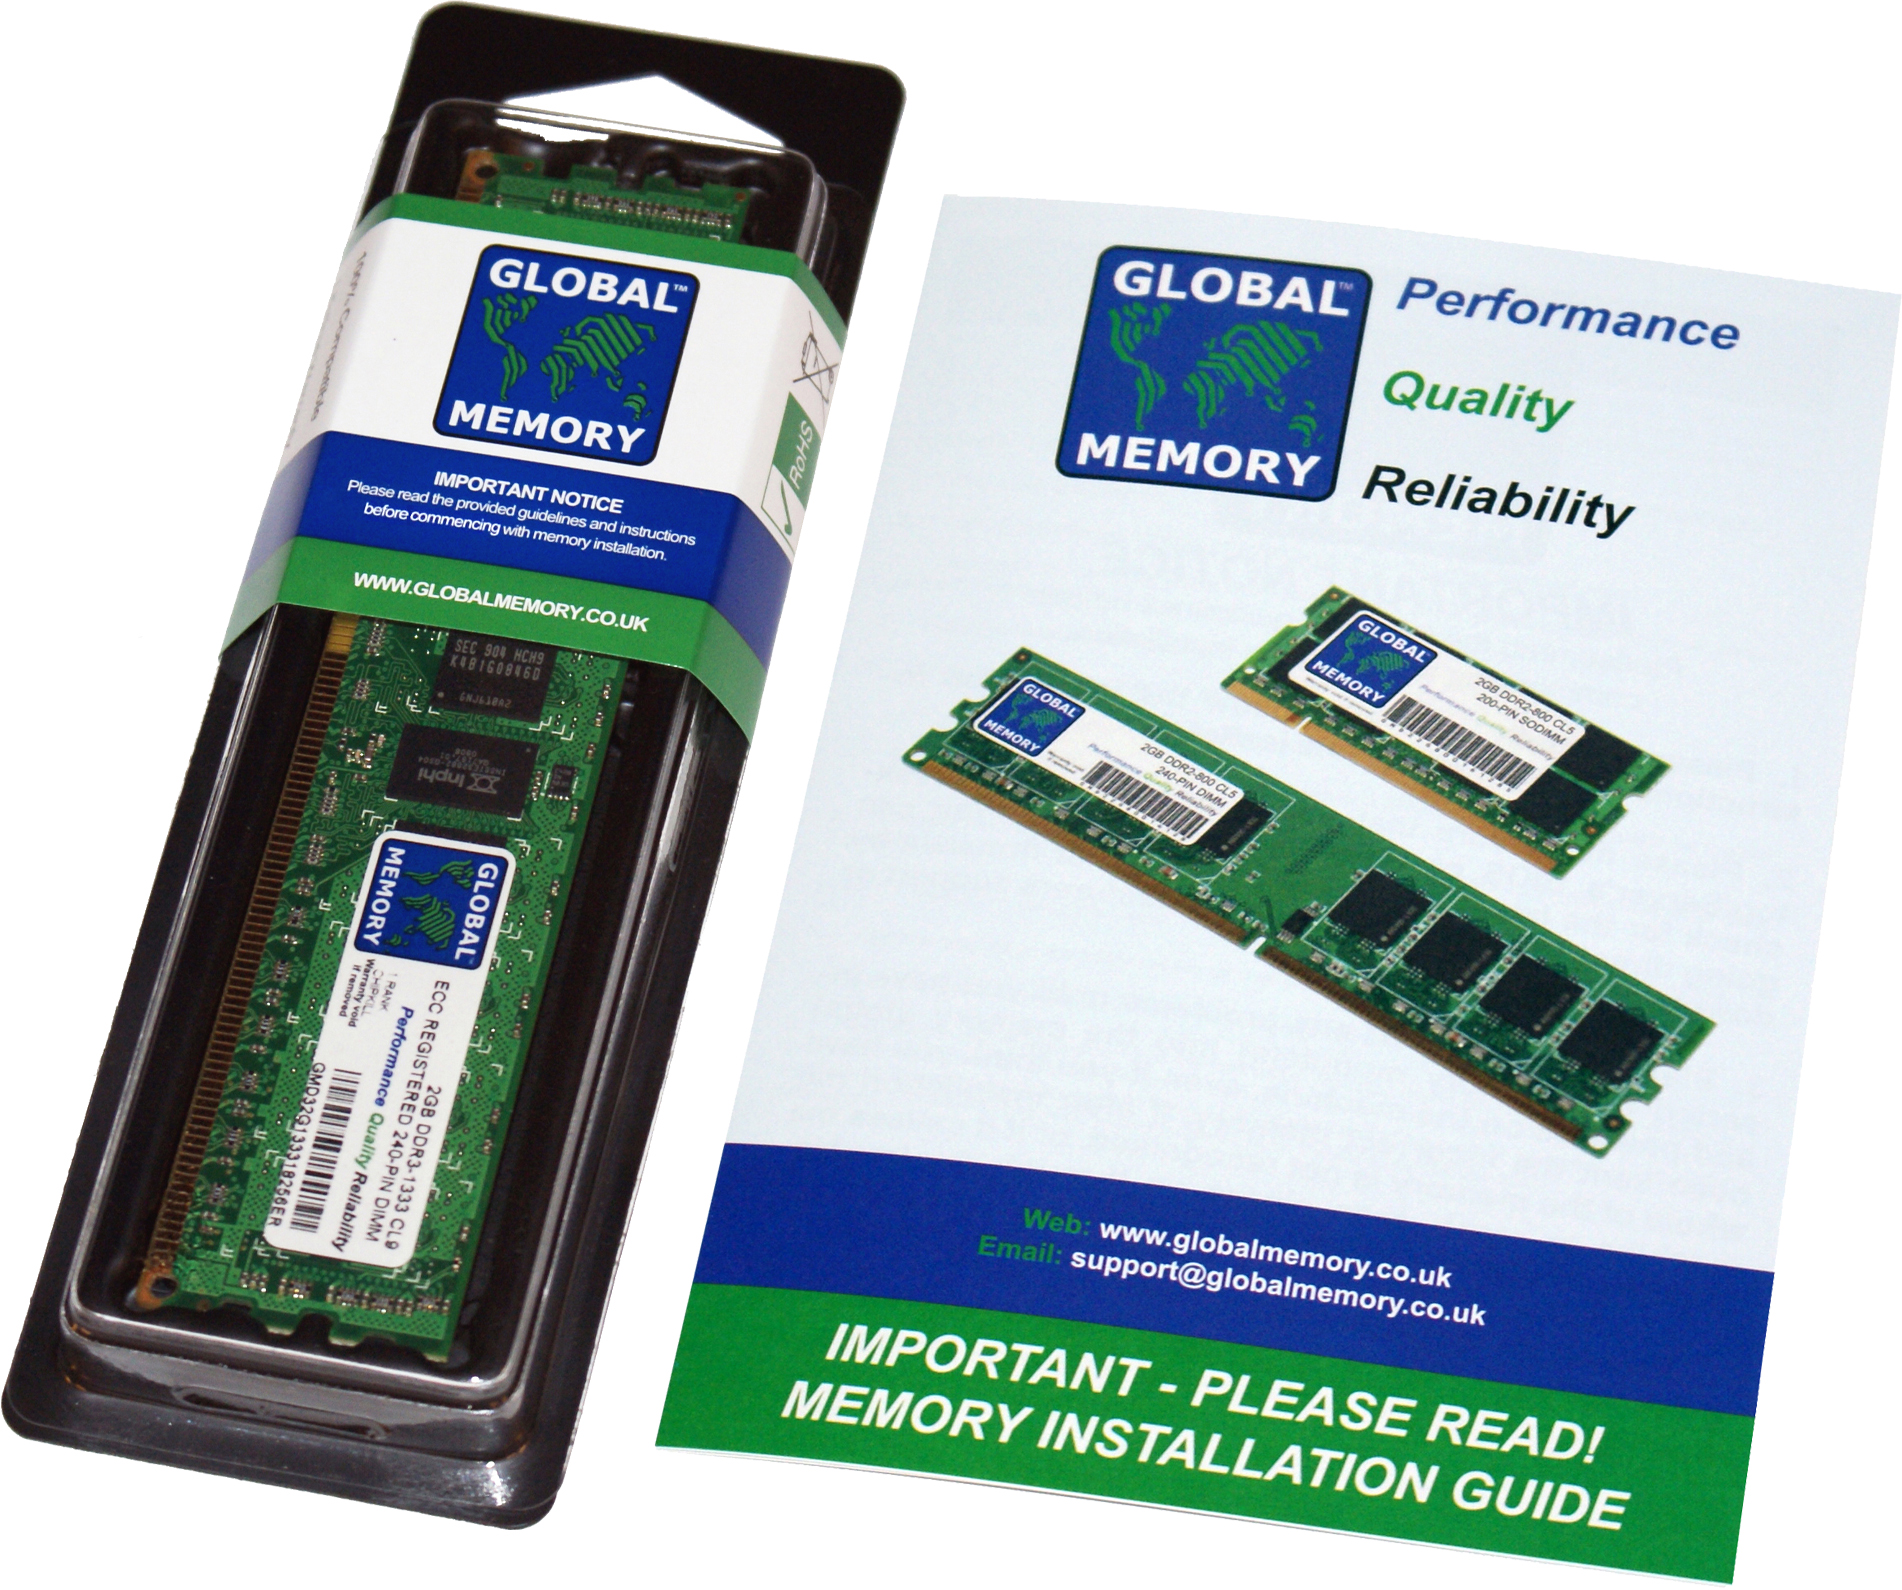 8GB DDR4 2933MHz PC4-23400 288-PIN ECC REGISTERED DIMM (RDIMM) MEMORY RAM FOR APPLE MAC PRO (2019)